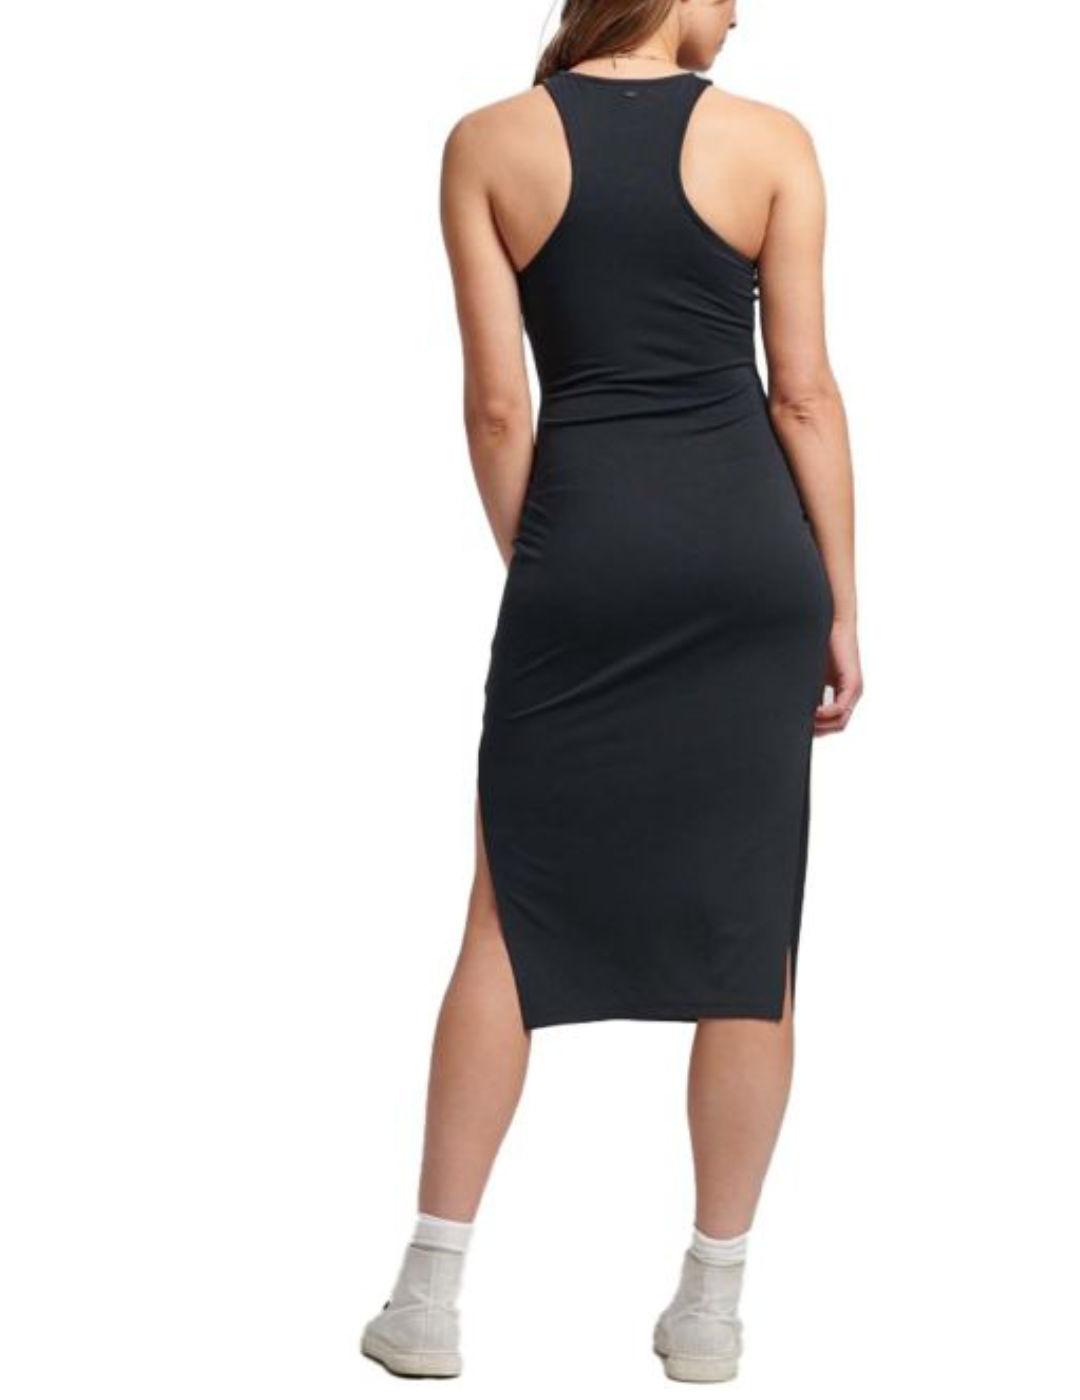 Vestido Supedry Studio negro midi ajustado para mujer